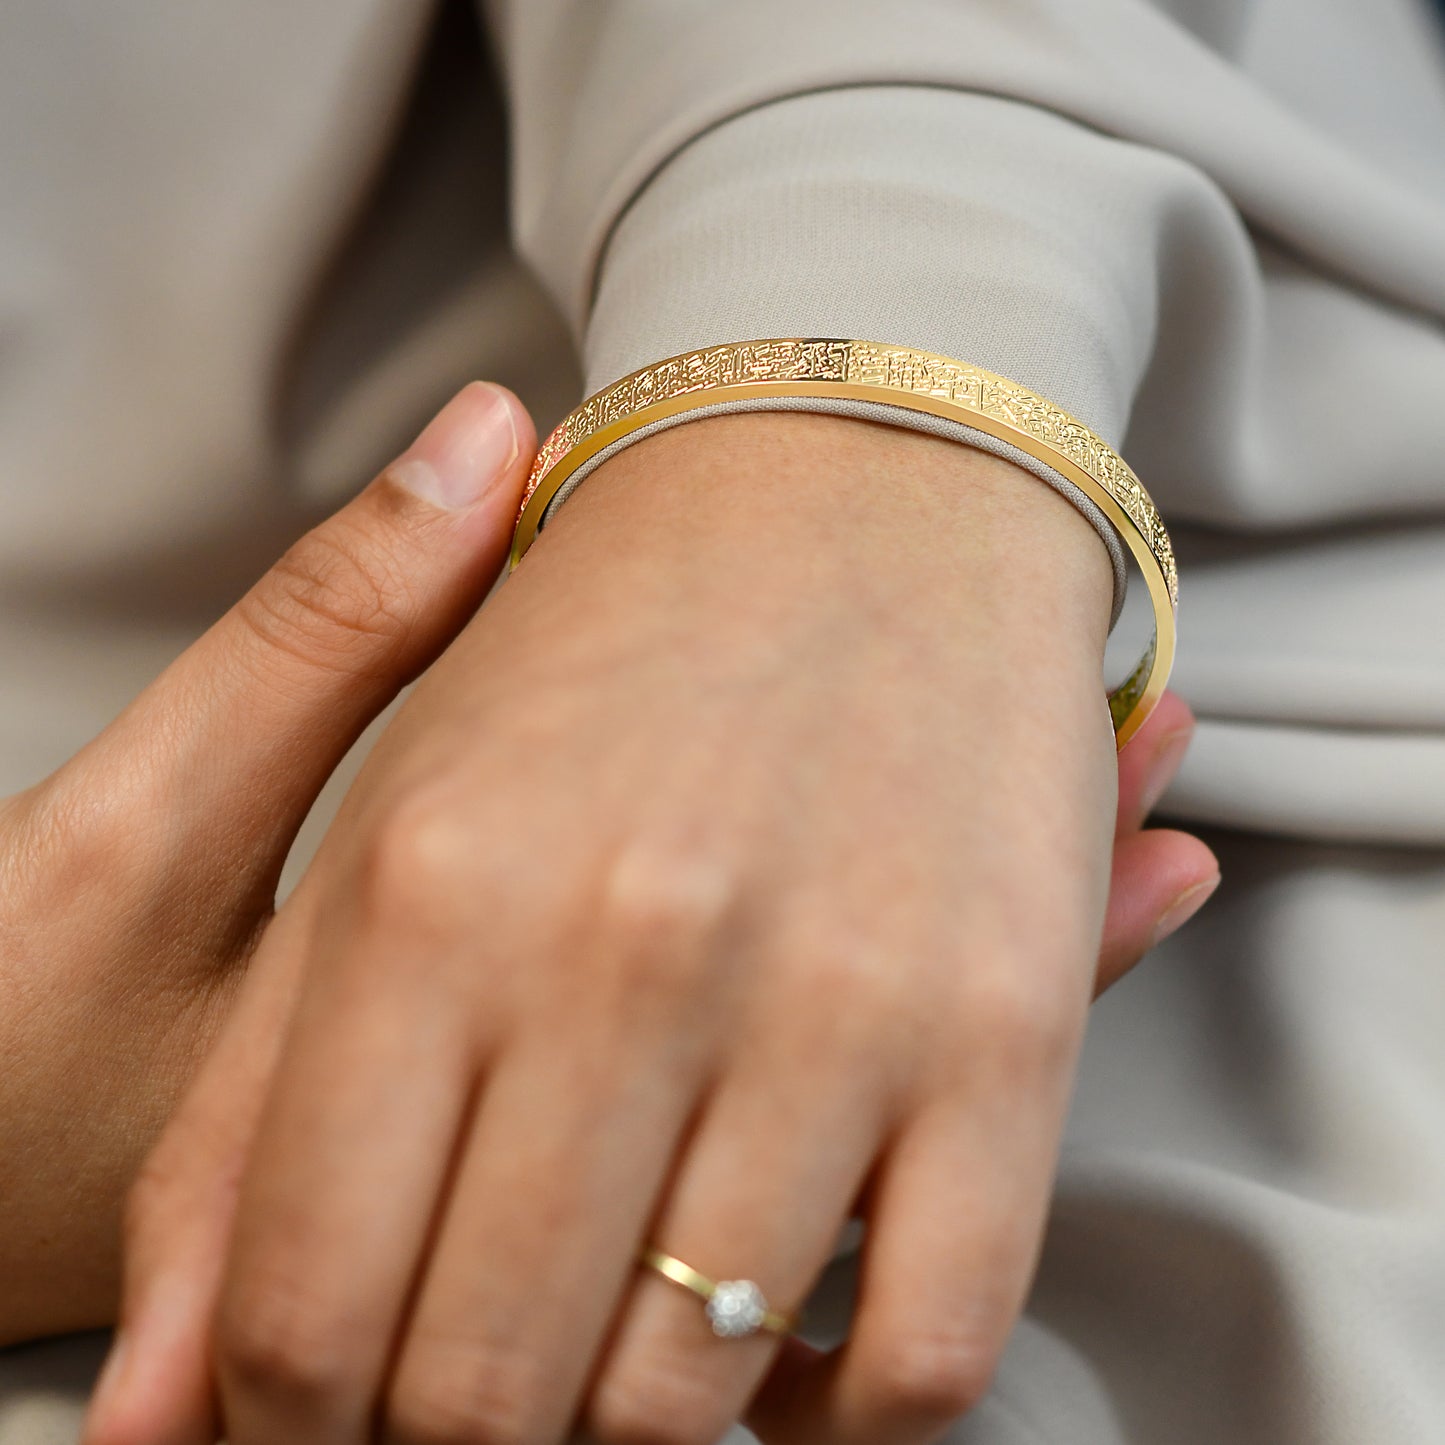 Darjali Jewelry Ayat Al-Kursi Bangle Bracelet 18K Gold